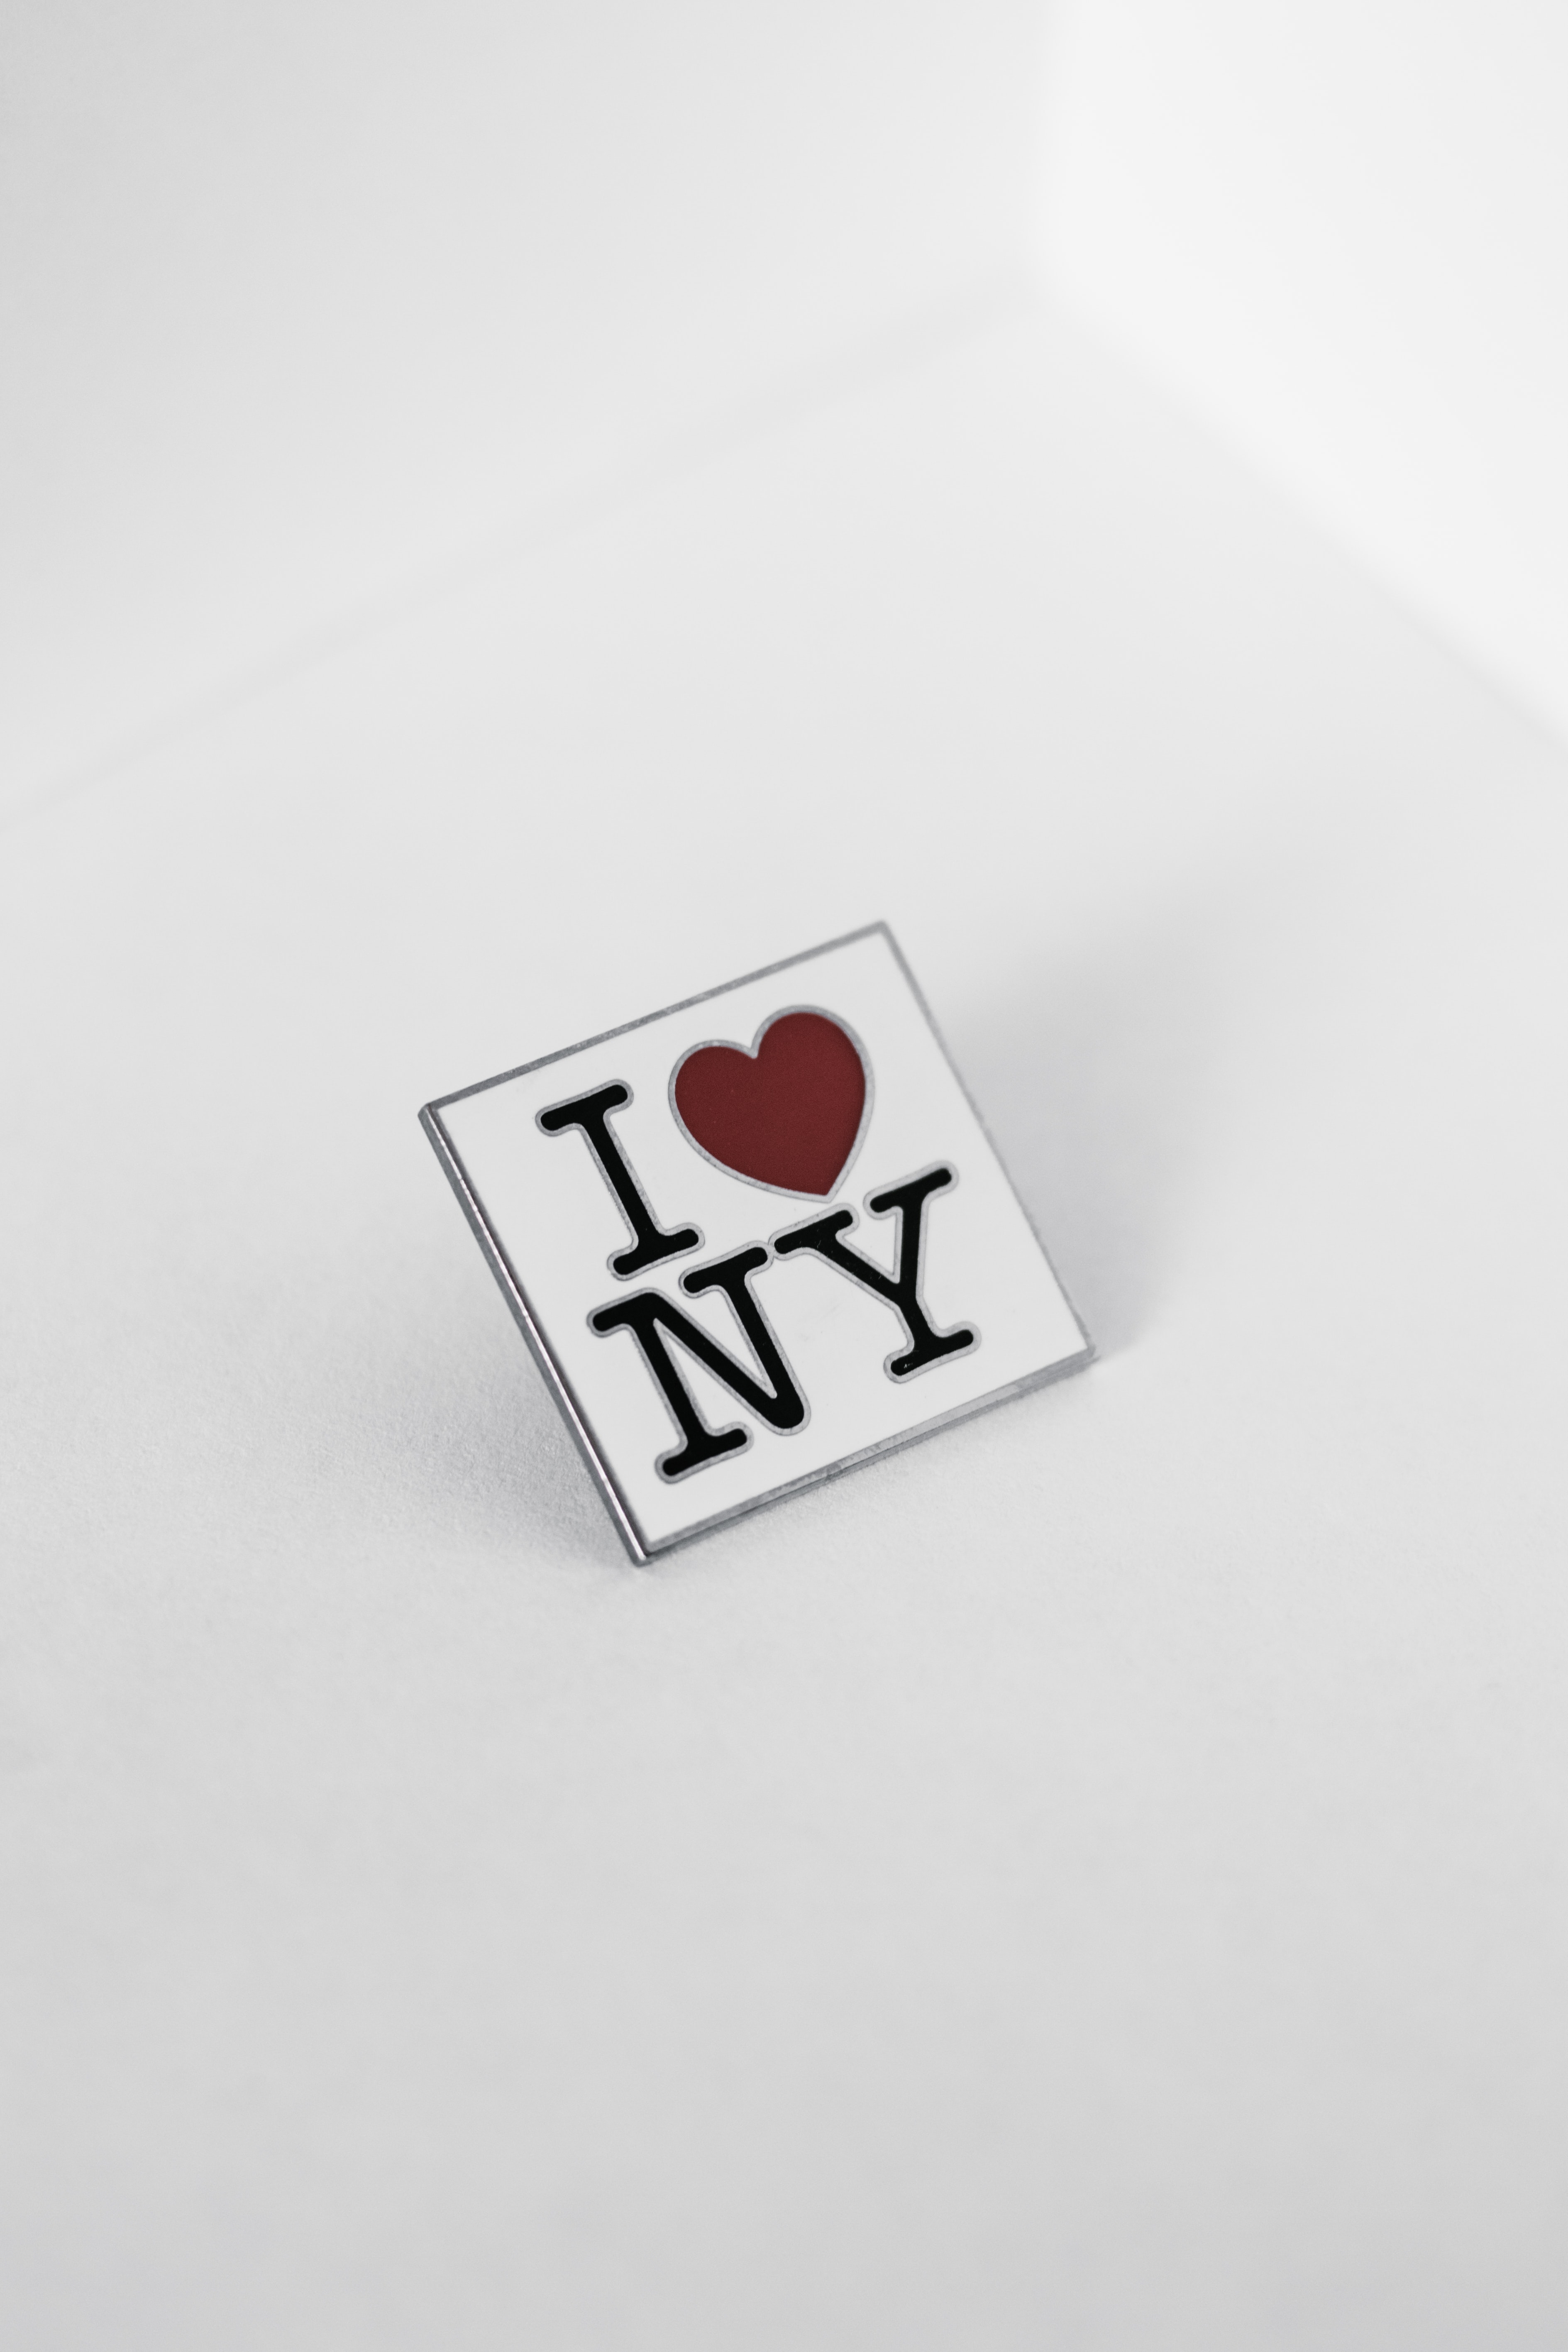 words, inscription, heart, new york, icon, badge Free Stock Photo